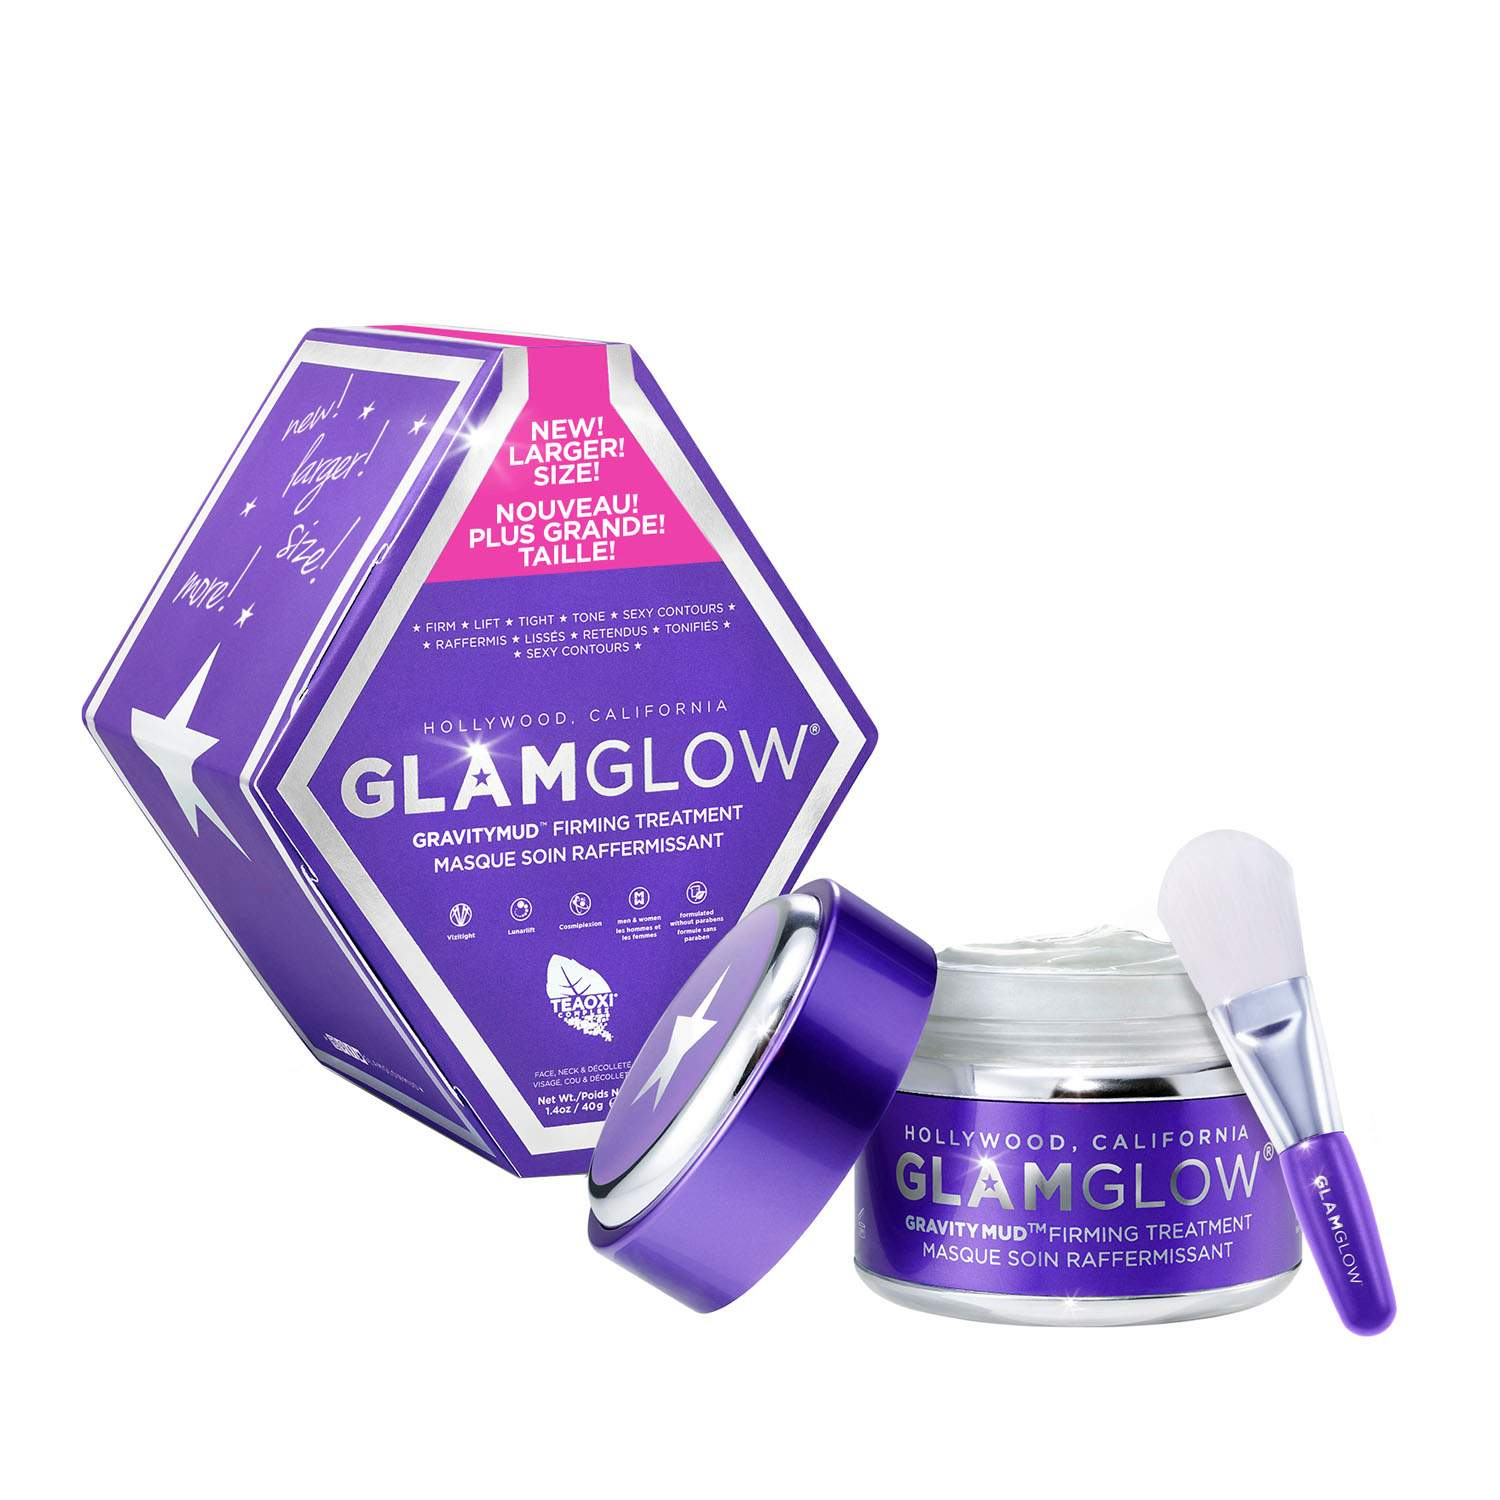 GLAMGLOW GRAVITYMUD Firming Mask Treatment GLAMGLOW GRAVITYMUD Firming Mask Treatment 1